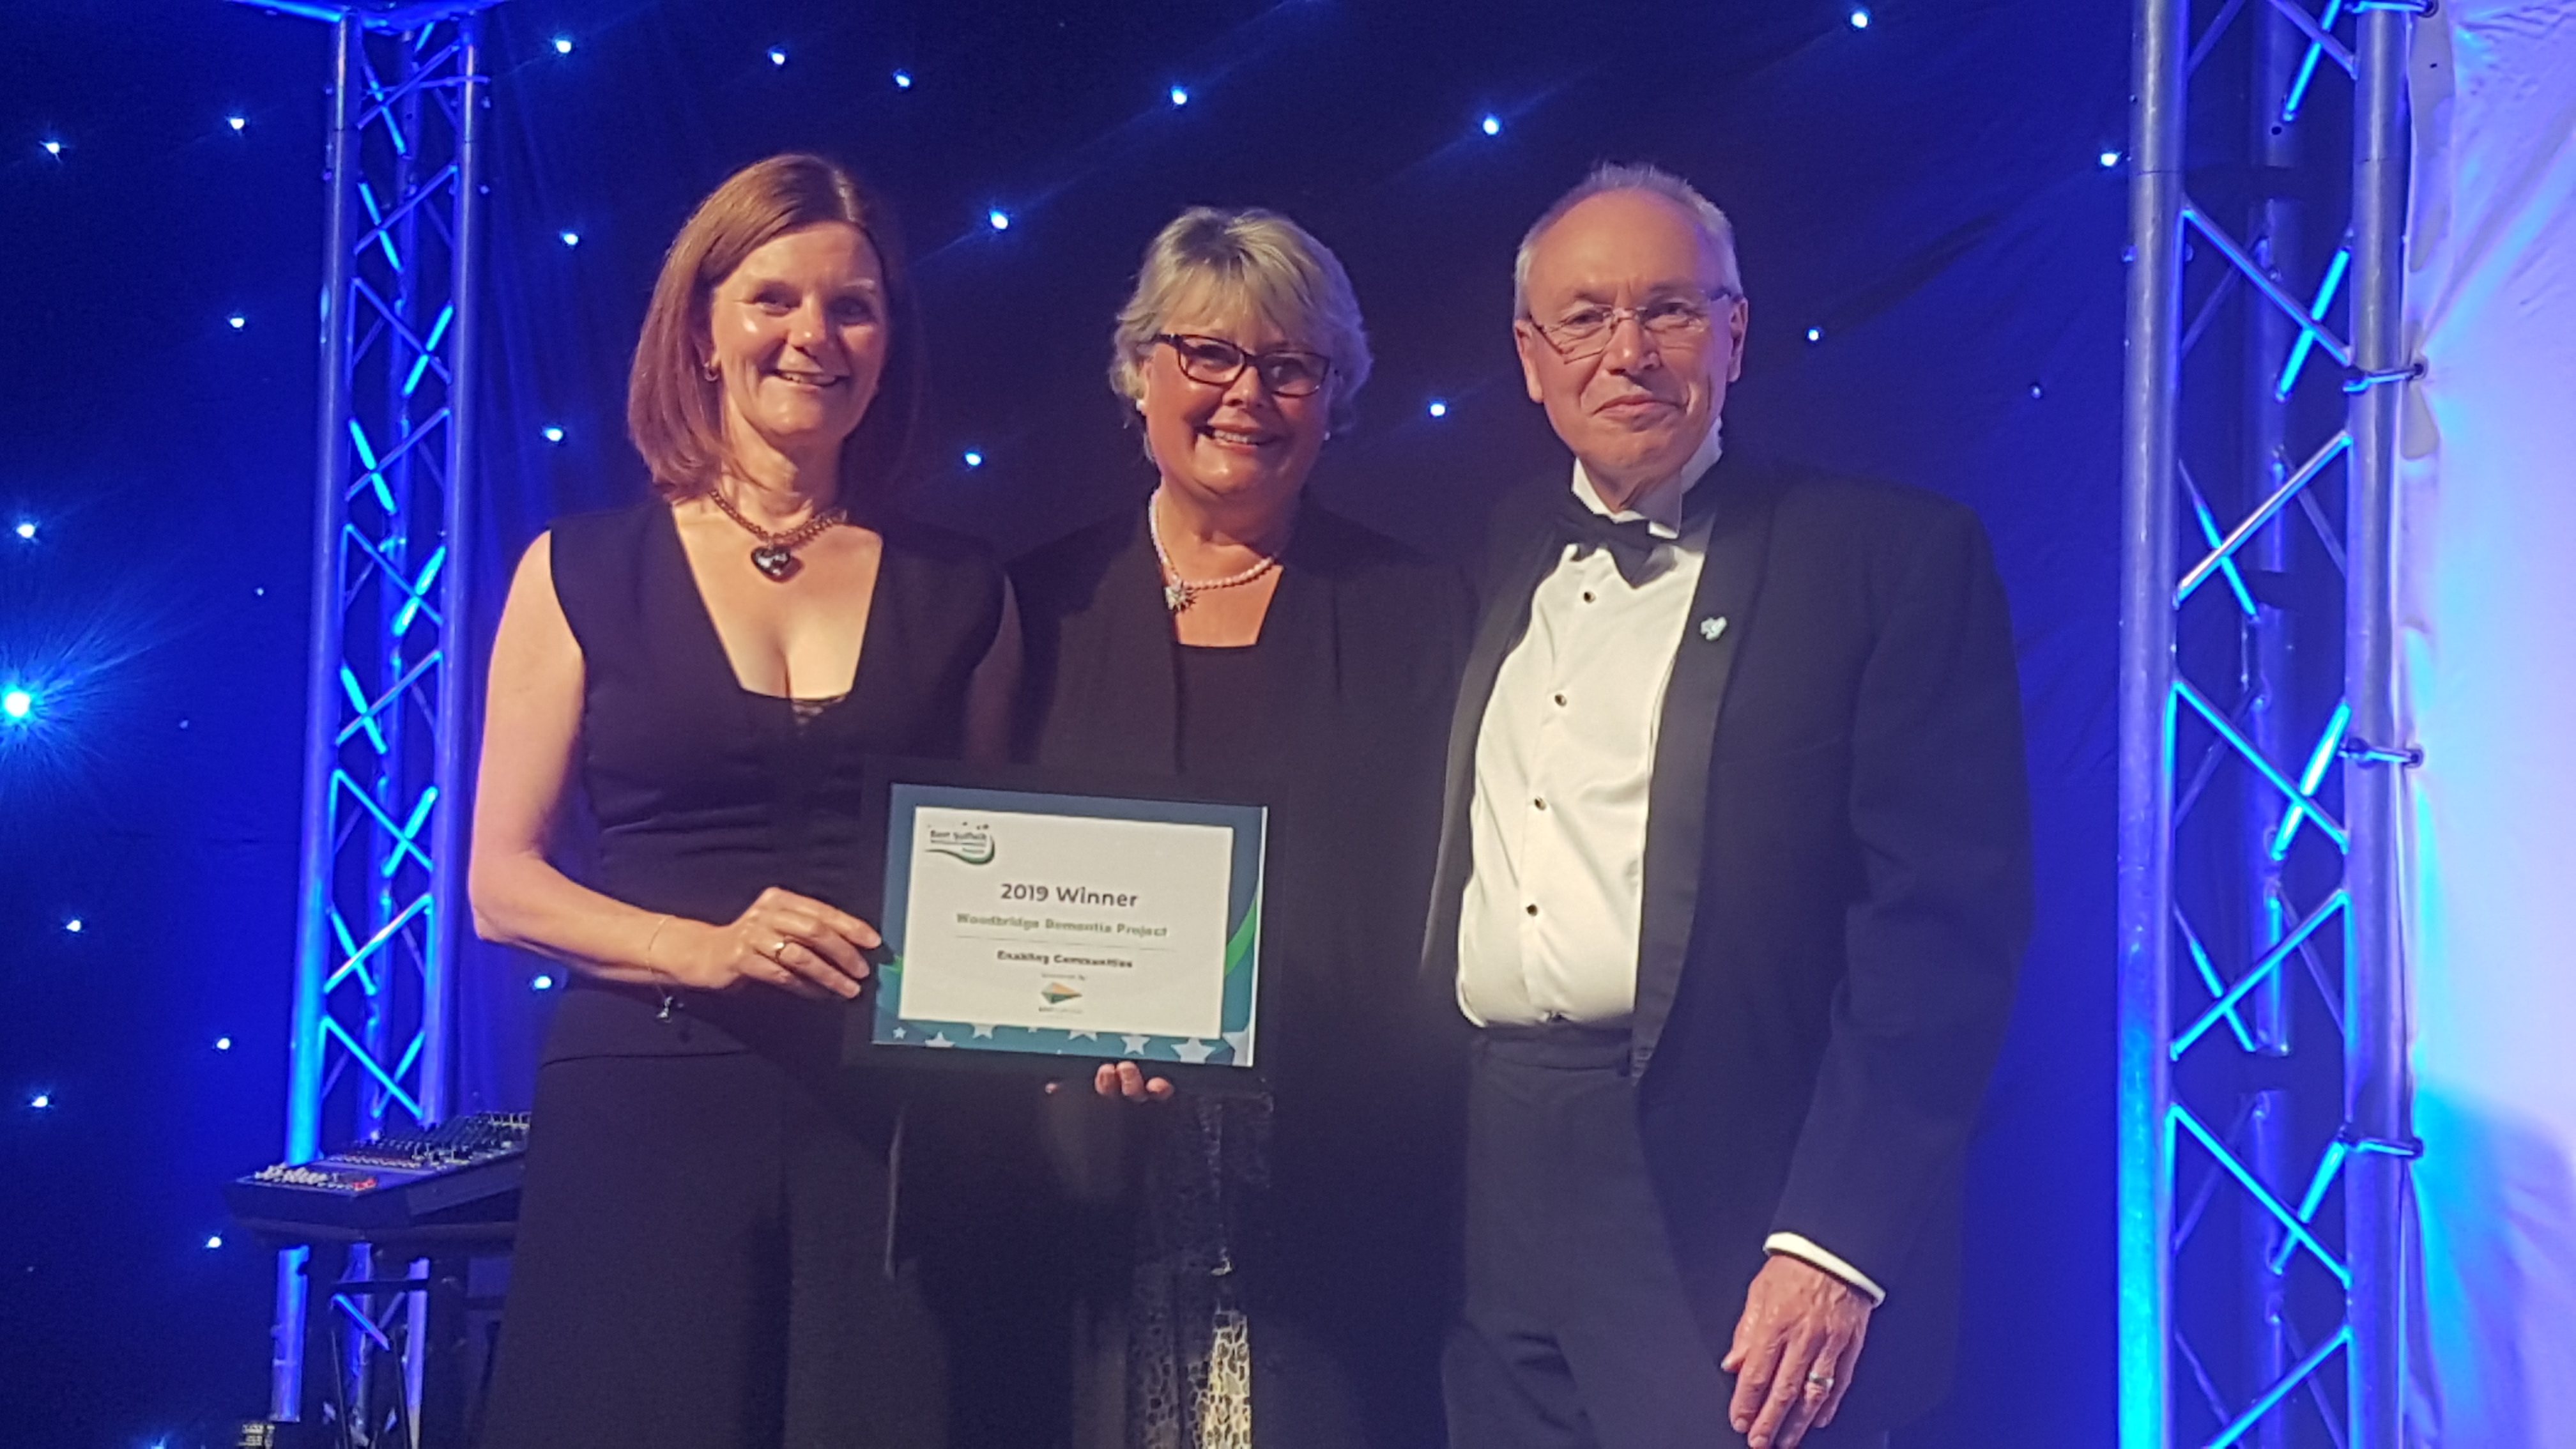 Woodbridge Dementia Project winner of the 2019 Enabling Communities Award